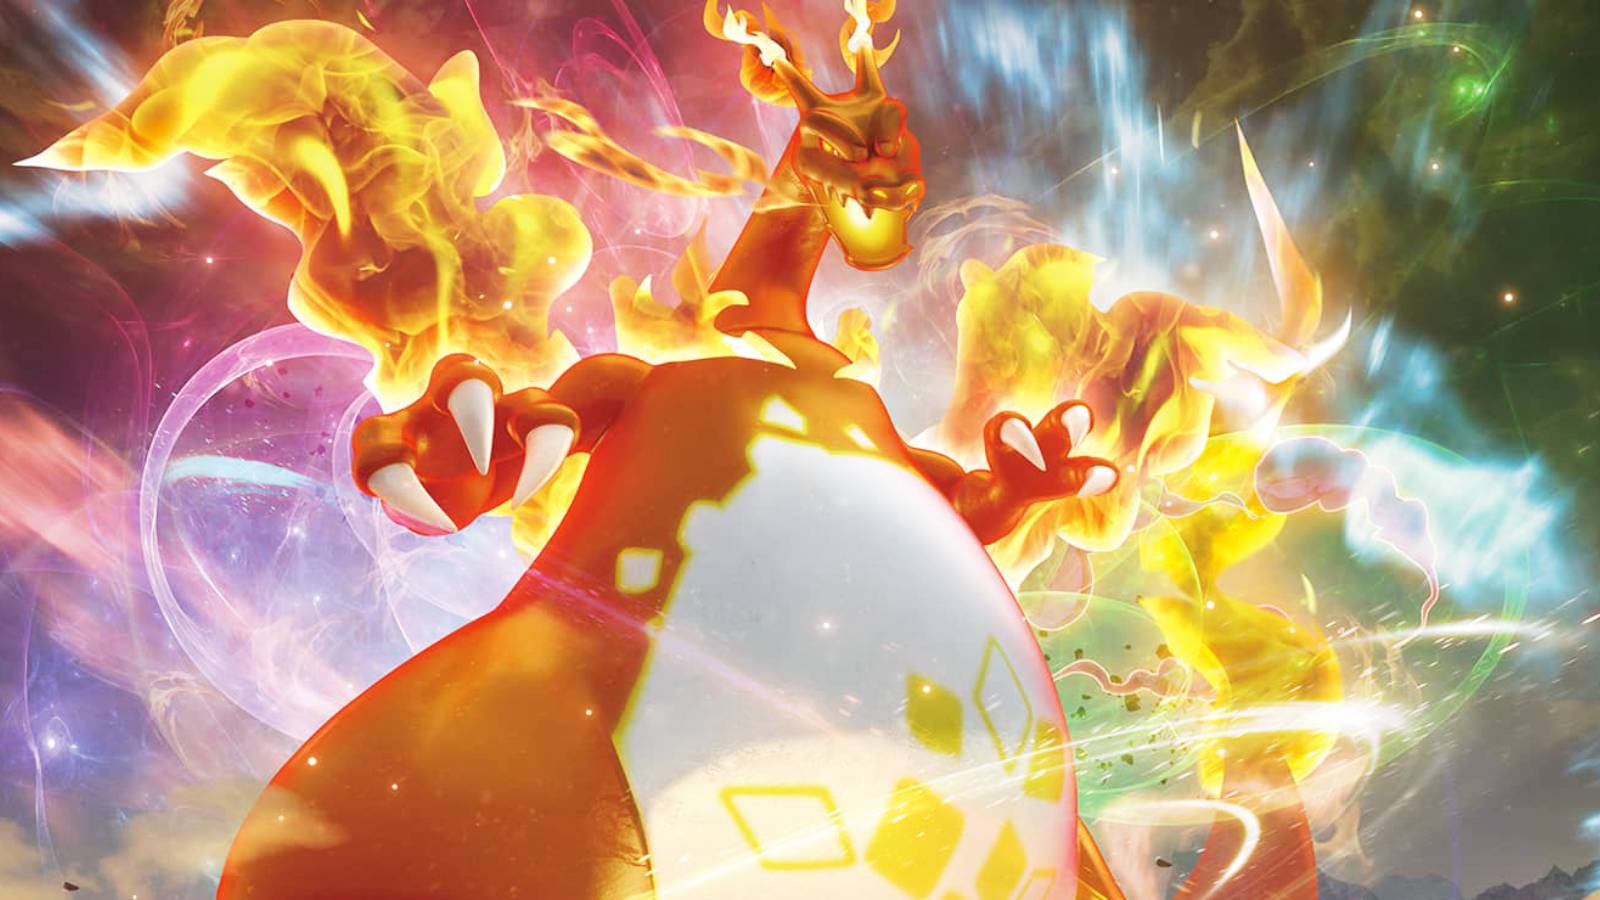 Promotional Pokemon TCG art shows the Gigantamax Charizard